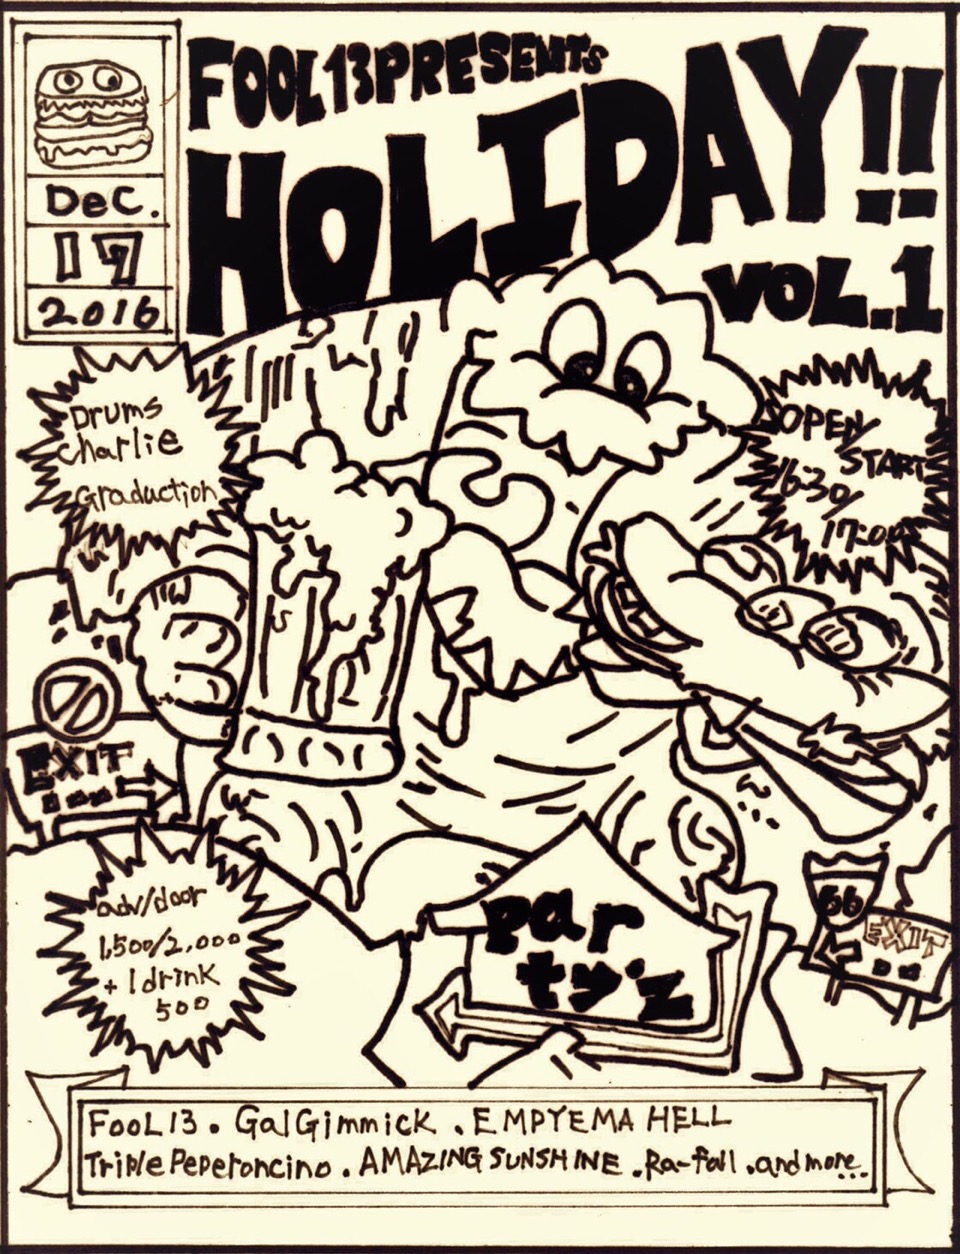 FooL 13 presents 【Holiday!! vol.1】